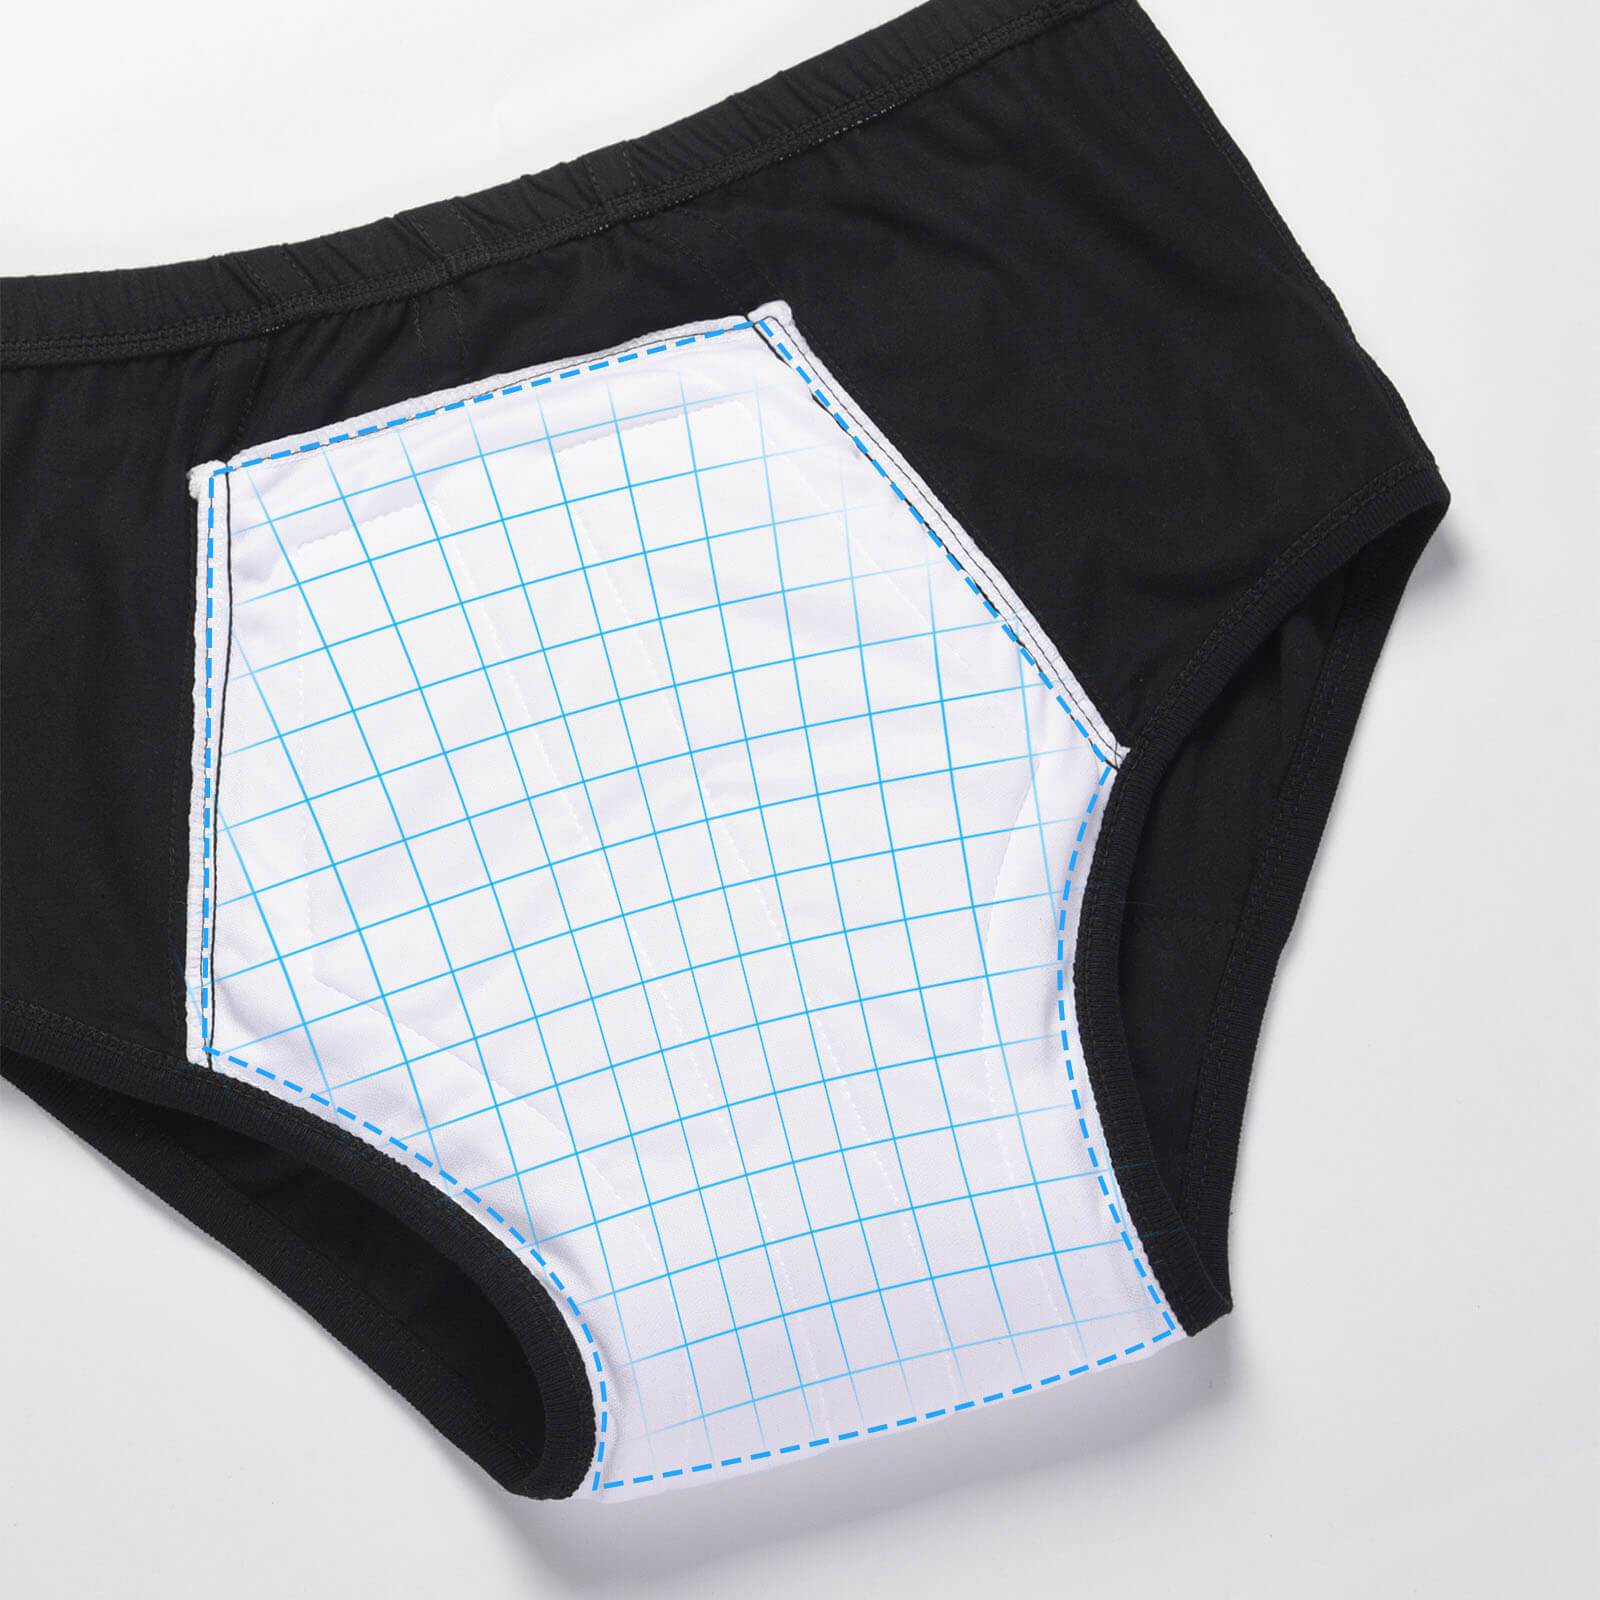 2 Pack-Assurance Men's Underwear Maximum Absorbency, 19 Count Each